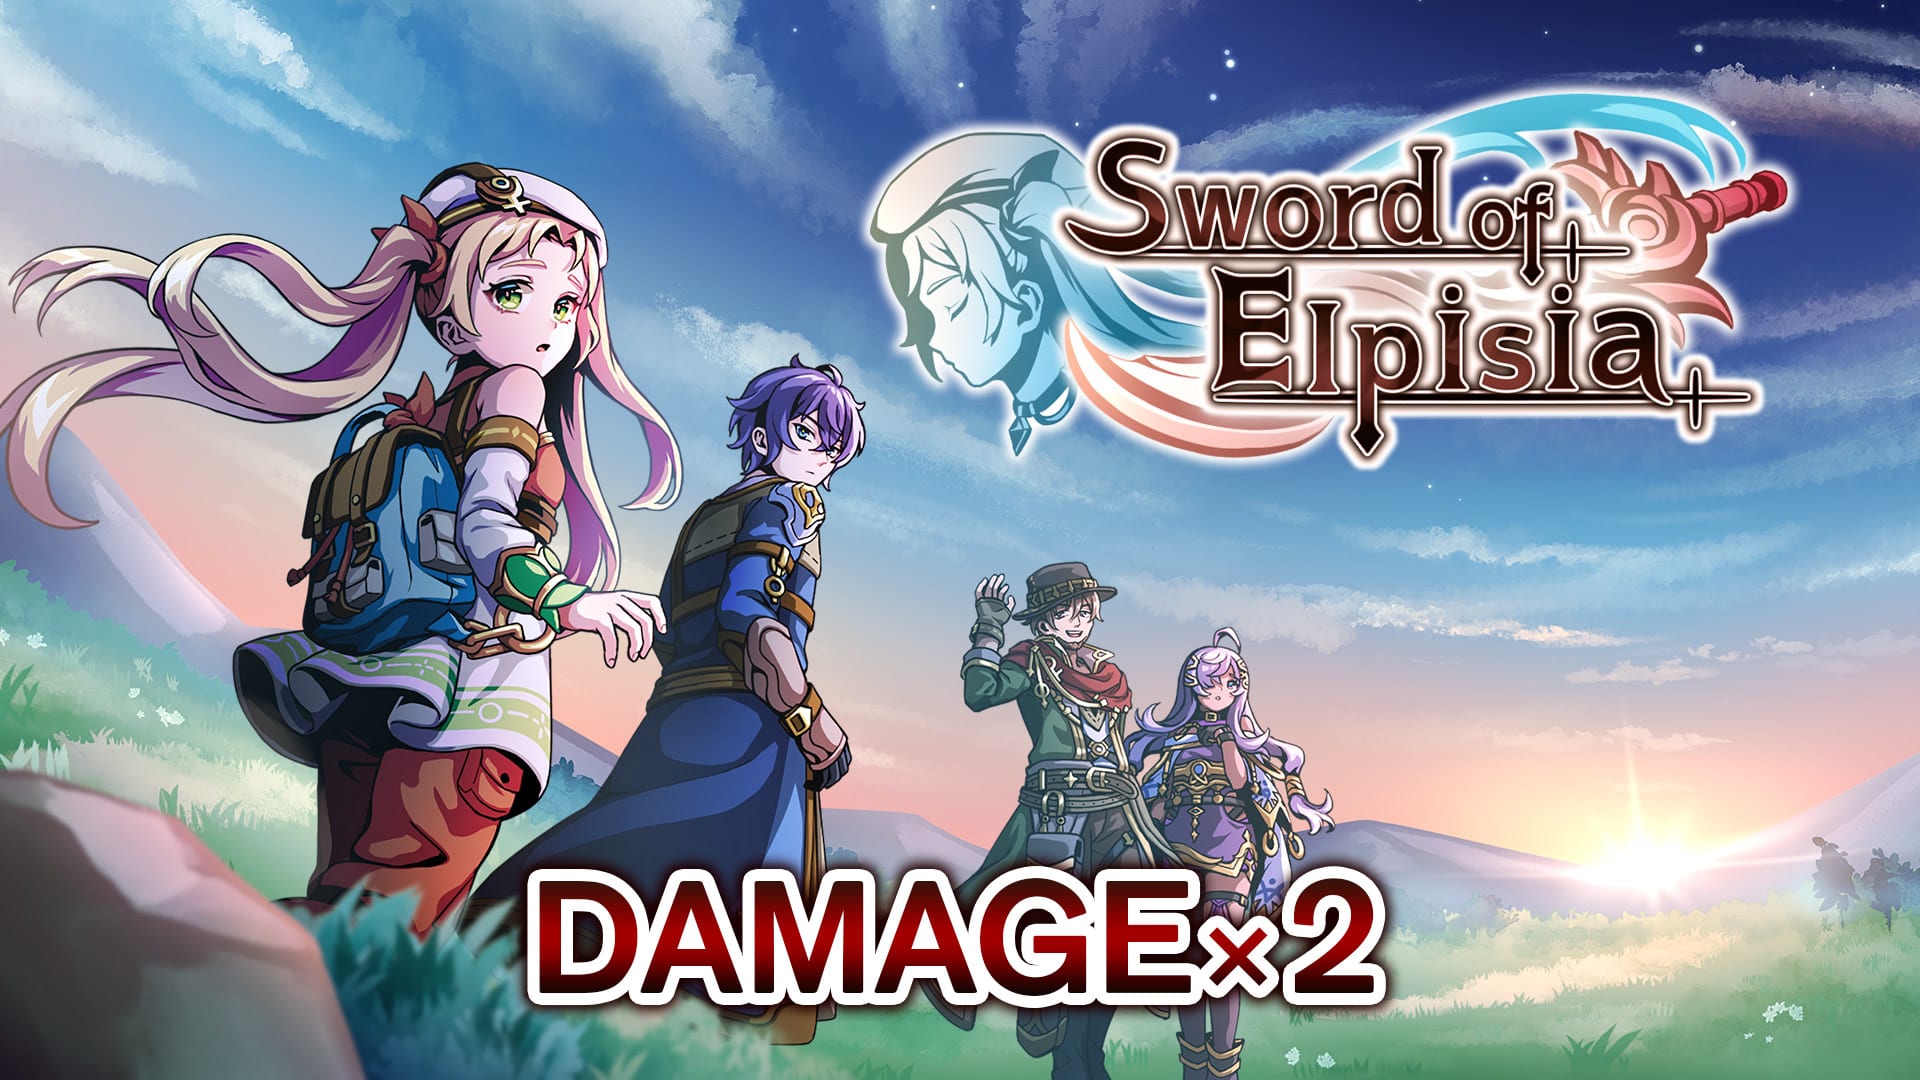 Damage x2 - Sword of Elpisia